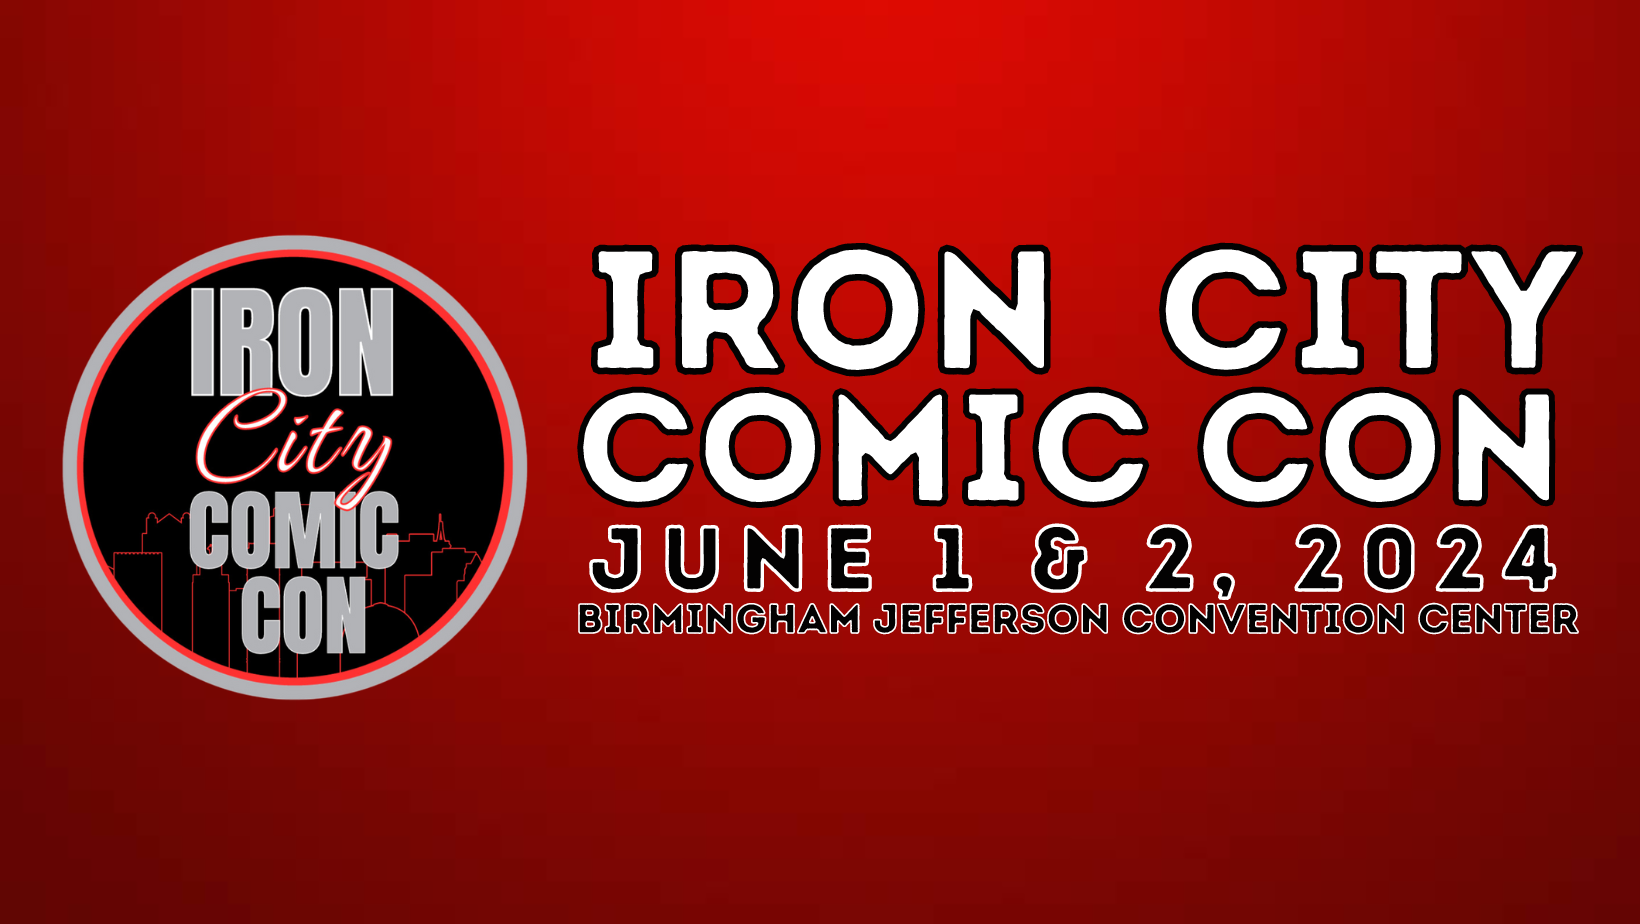 Iron City Comic Con 2024 Tickets at BirminghamJefferson Convention